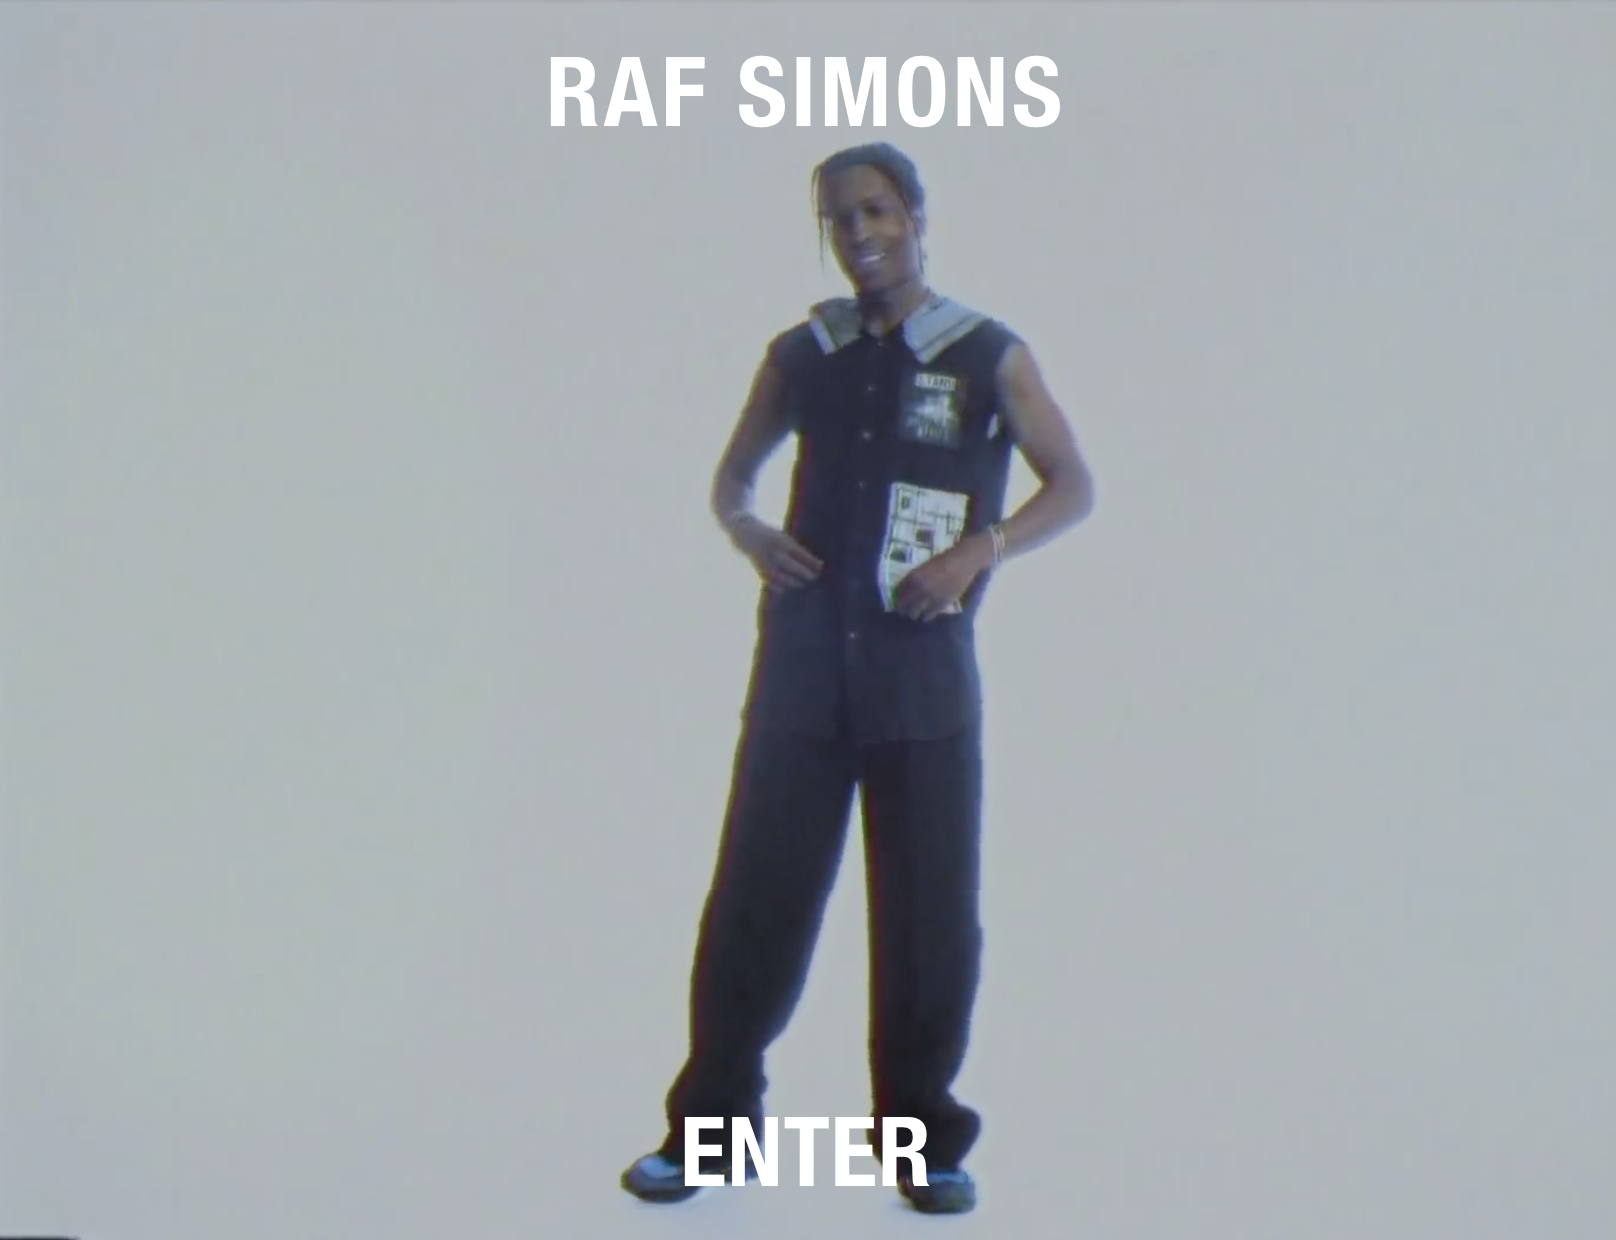 Raf Simons Runs A$AP Rocky’s “RAF” On His Website